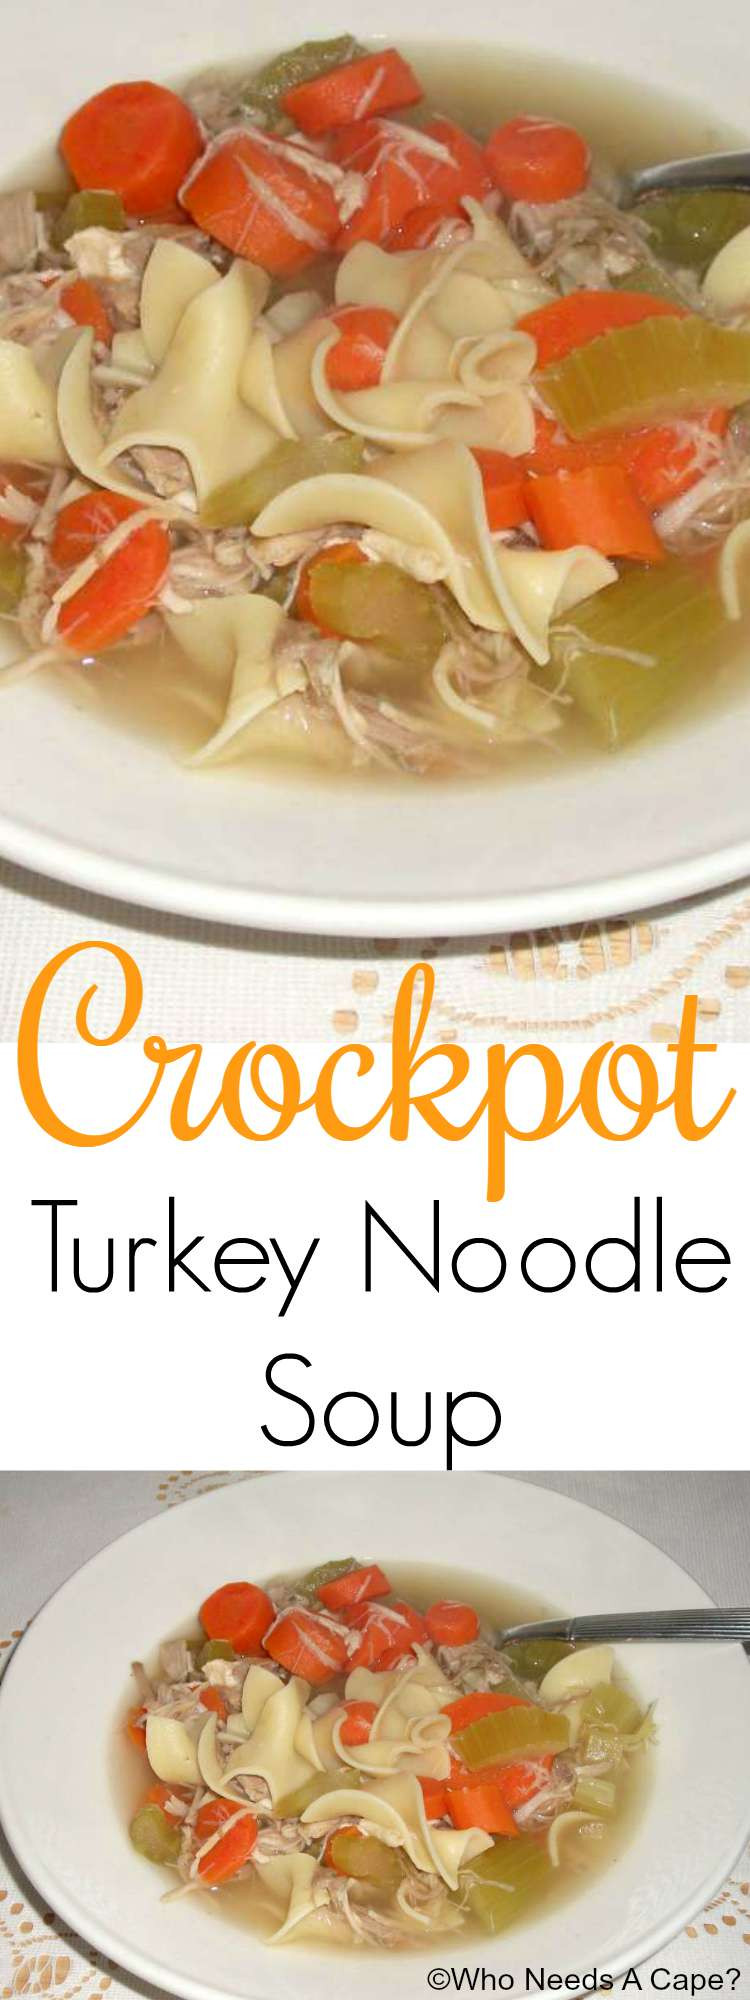 Leftover Turkey Soup Crock Pot
 Crockpot Turkey Noodle Soup